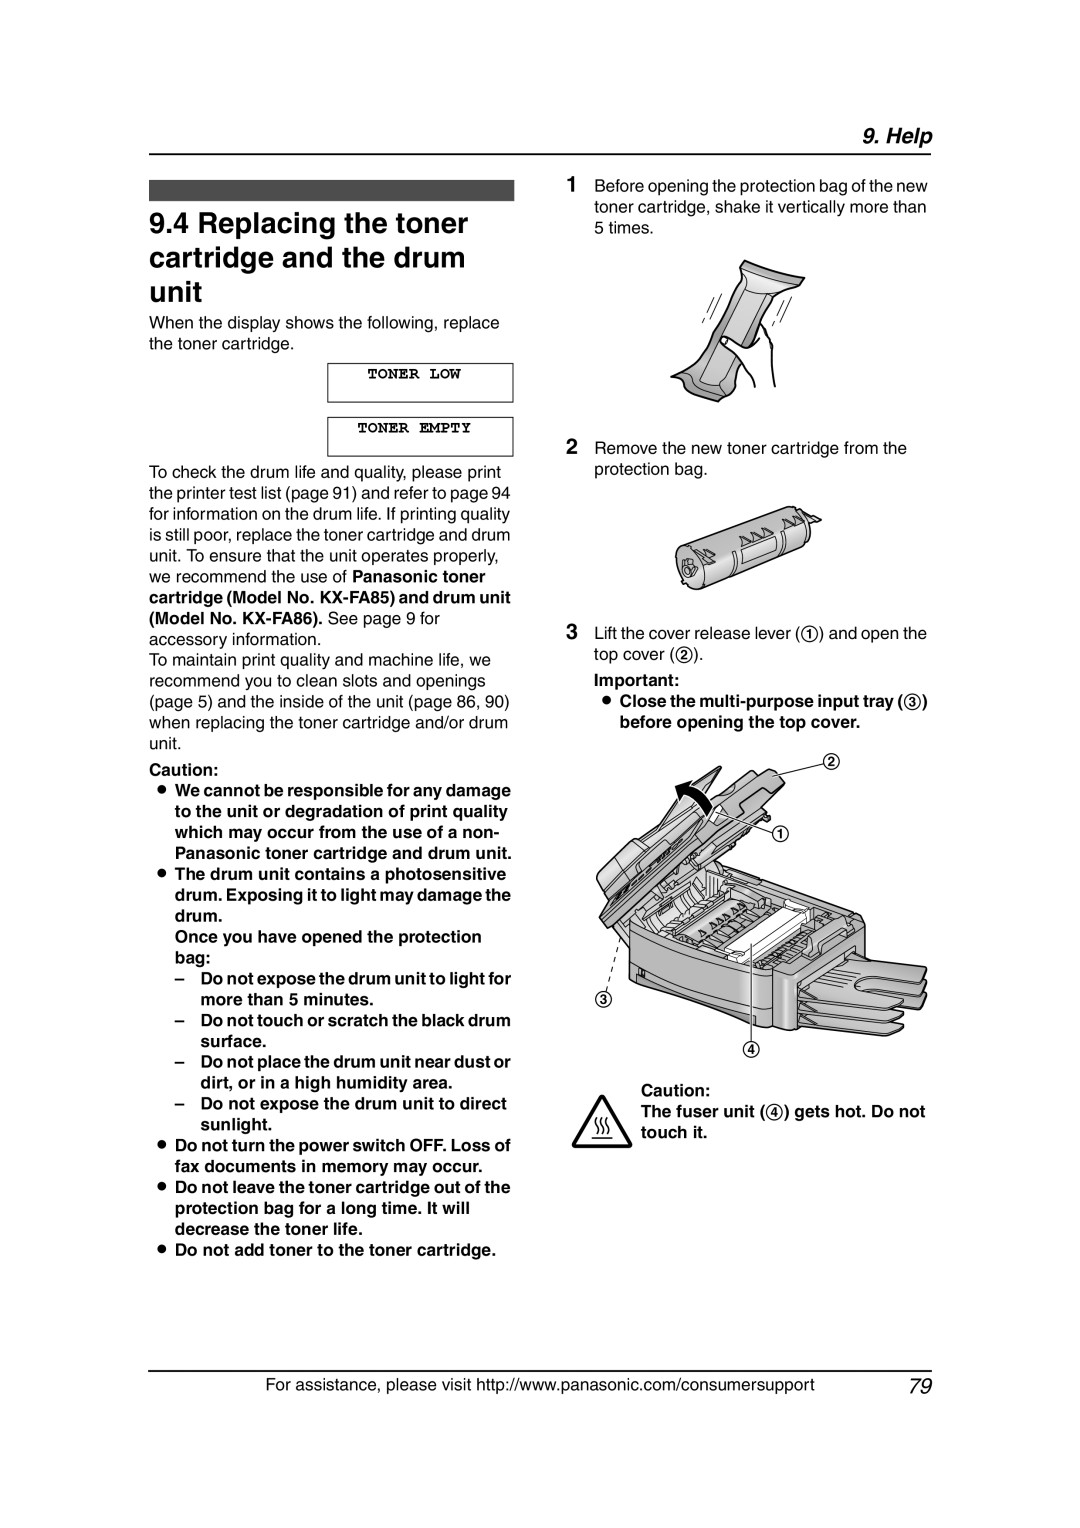 Panasonic KX-FLB851 manual Replacing the toner cartridge and the drum unit, Toner Low Toner Empty, Help 